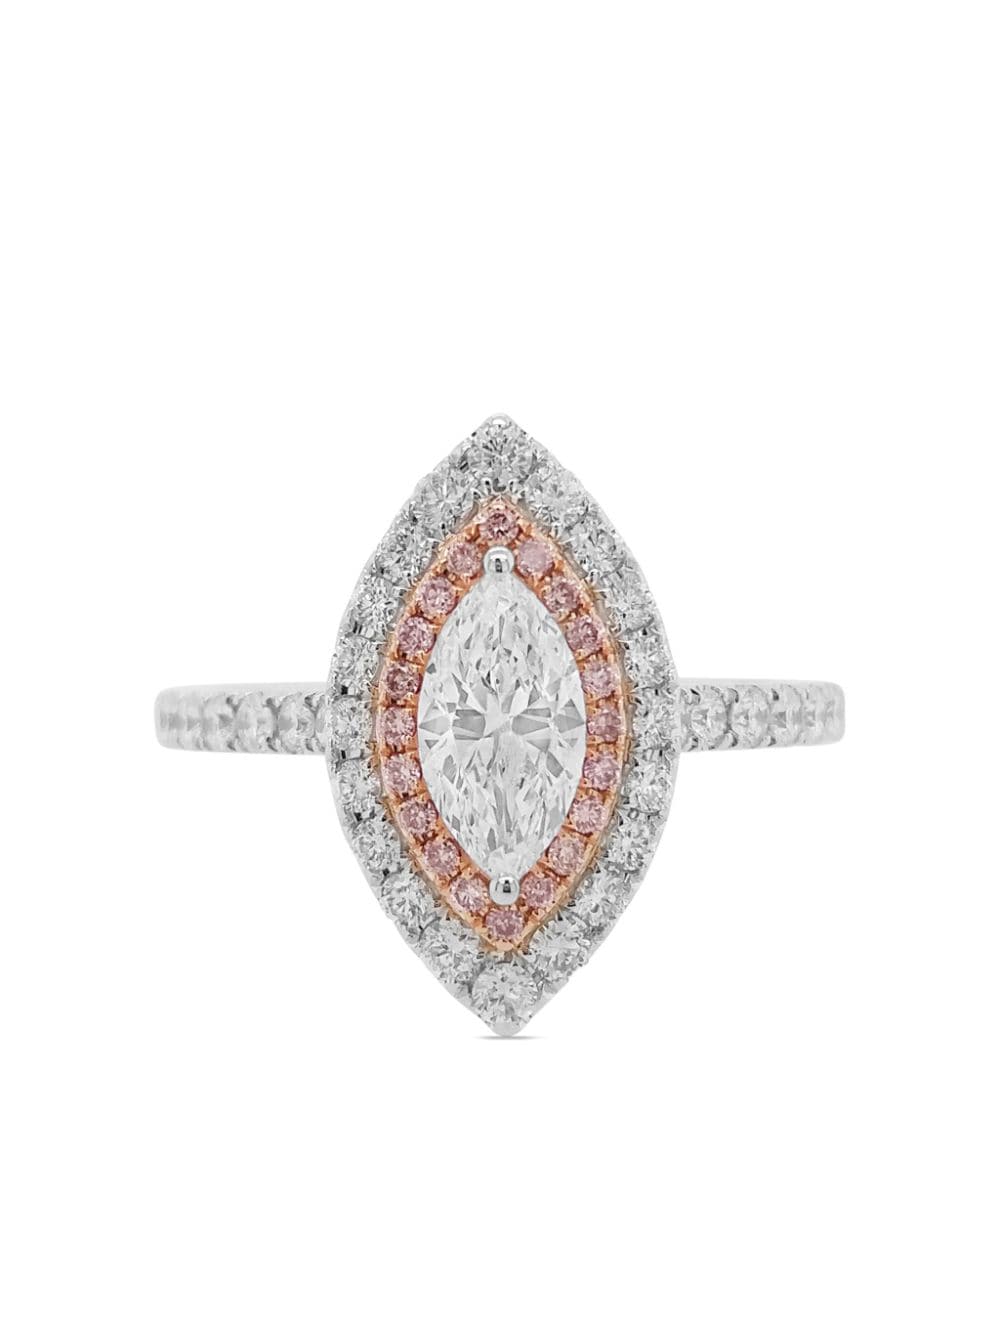 HYT Jewelry platinum and 18kt rose gold diamond ring - Silver von HYT Jewelry